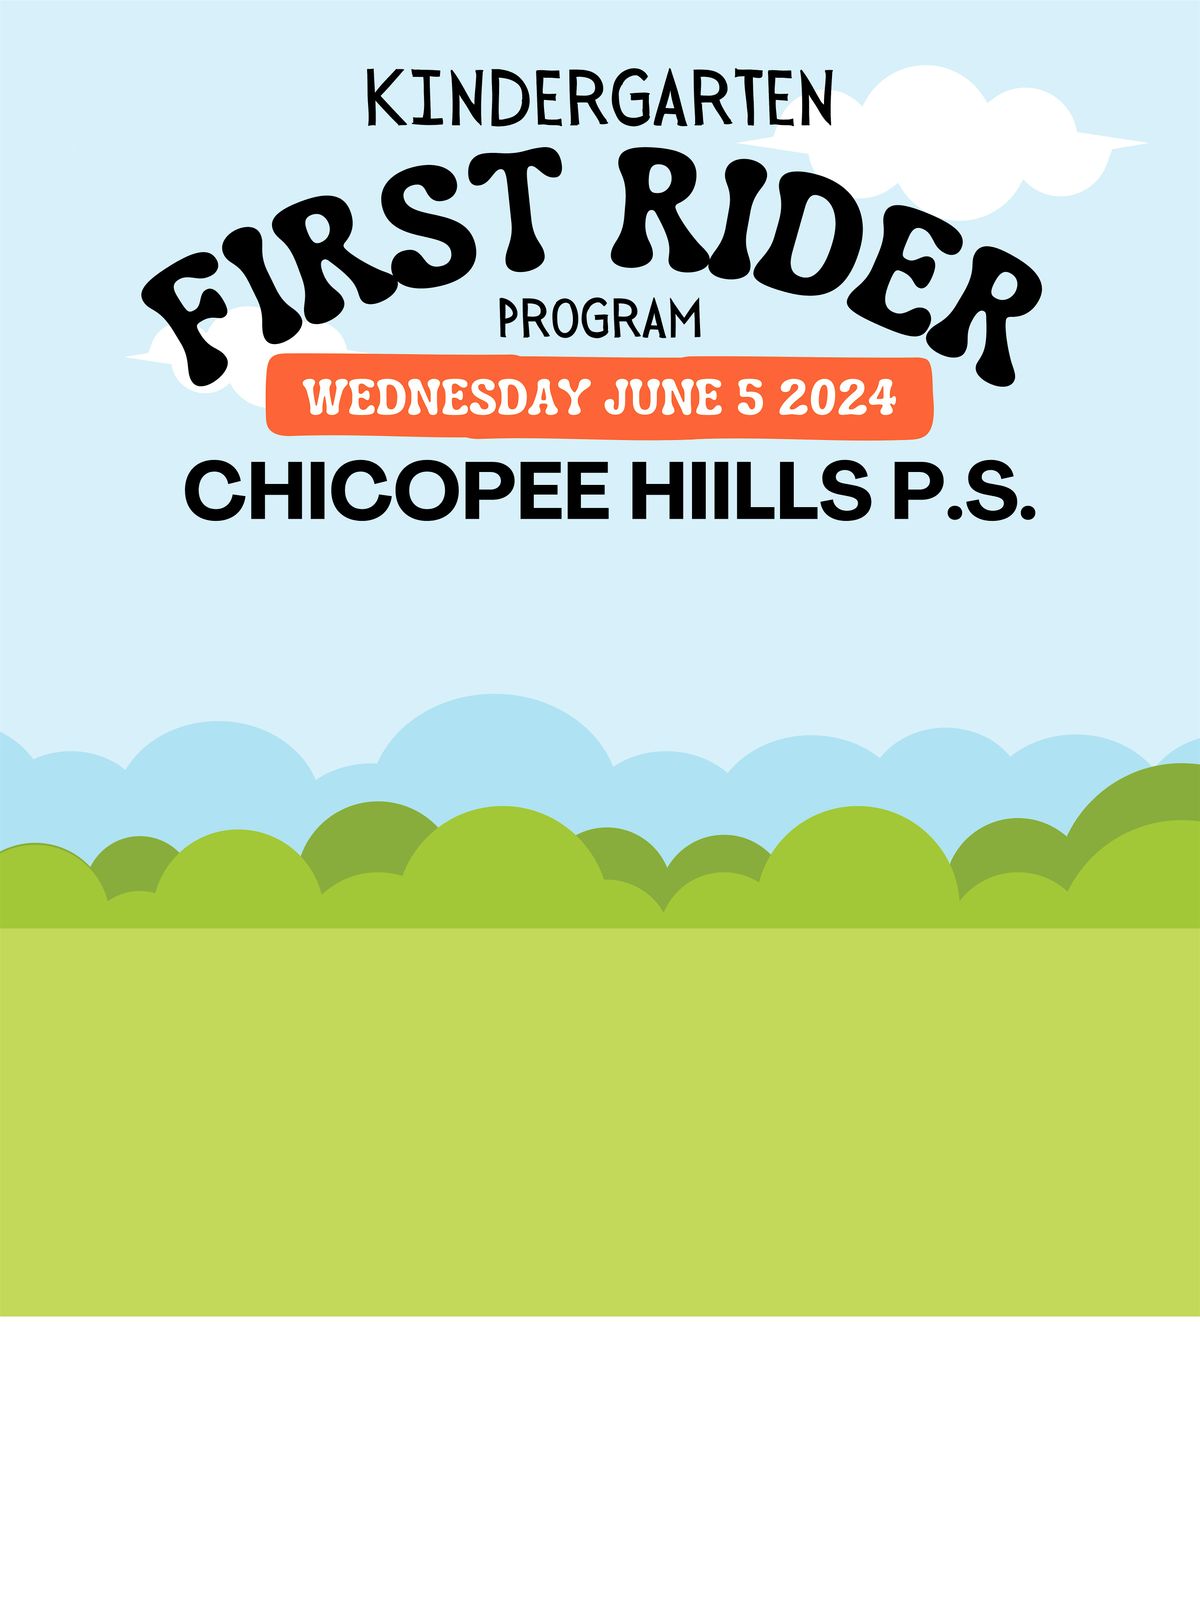 First Rider Program - Chicopee Hills P.S. Kitchener, ON (6:30 PM Session)